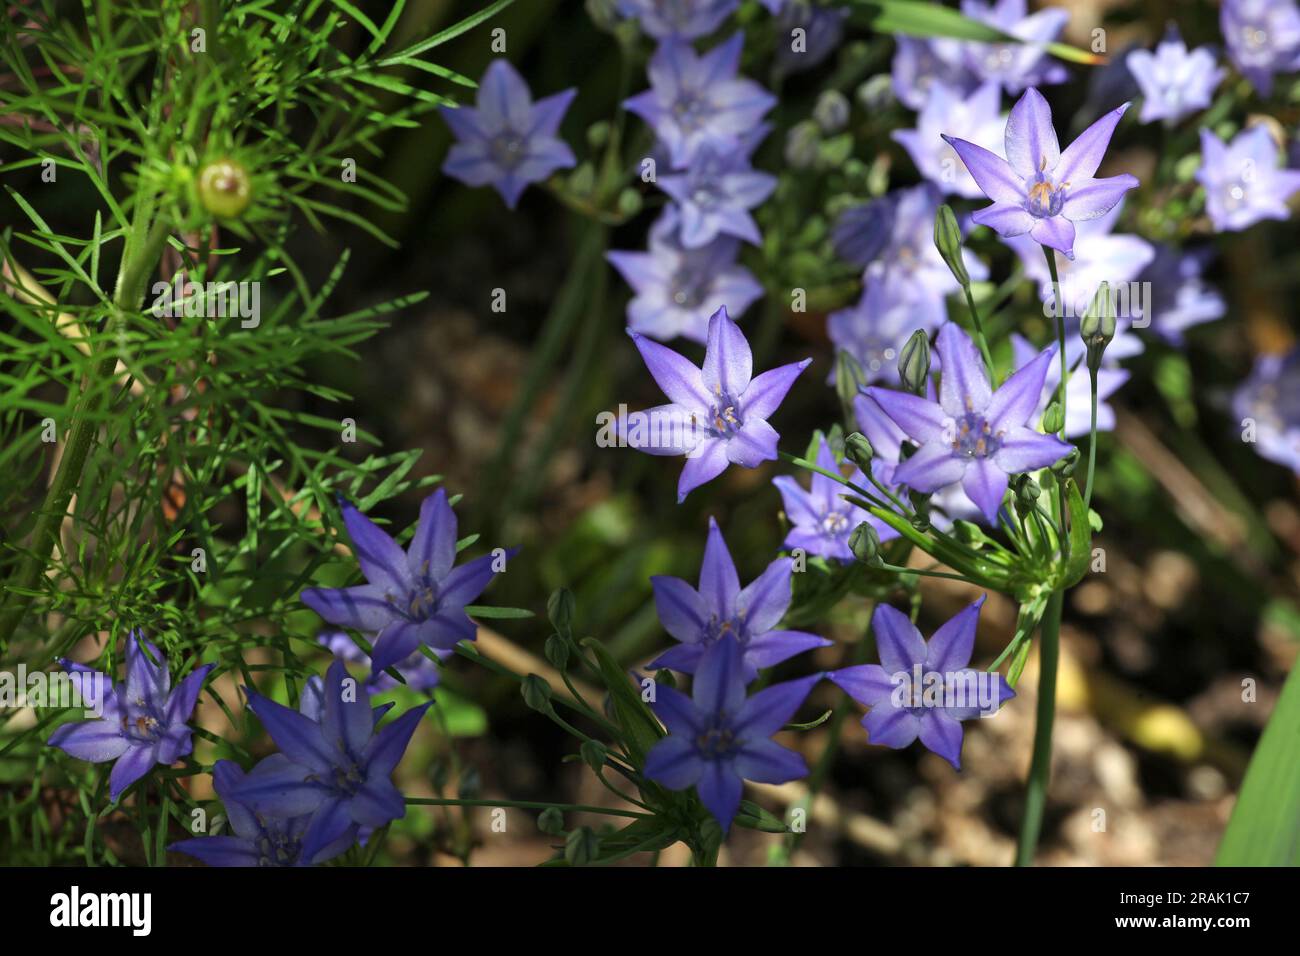 Purple grassnut triplet lilies in flower. Stock Photo